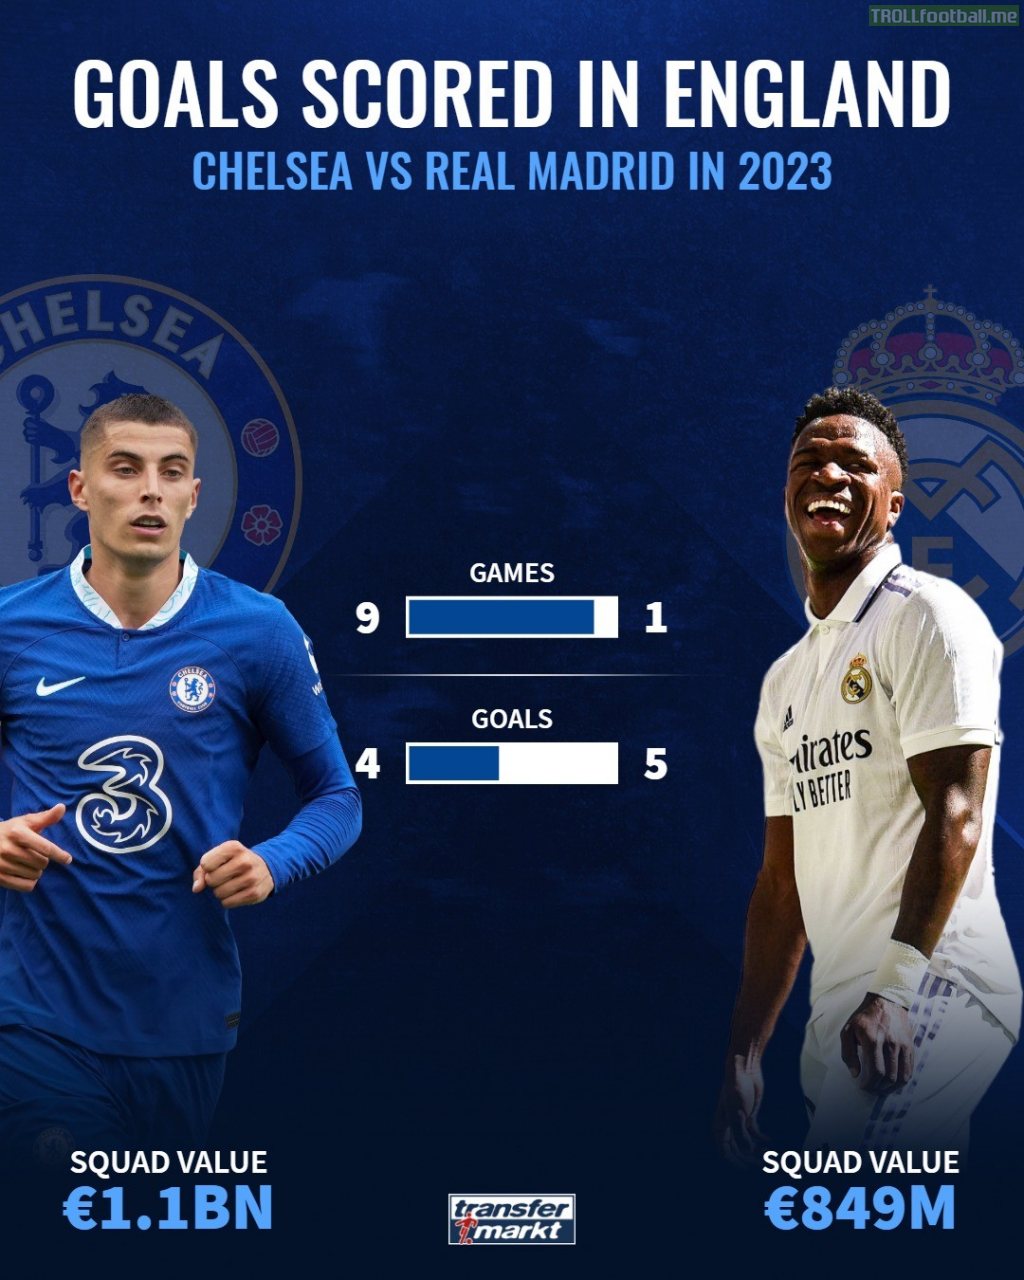 [Transfermarkt] Goals scored in England in 2023 - Chelsea vs Real Madrid